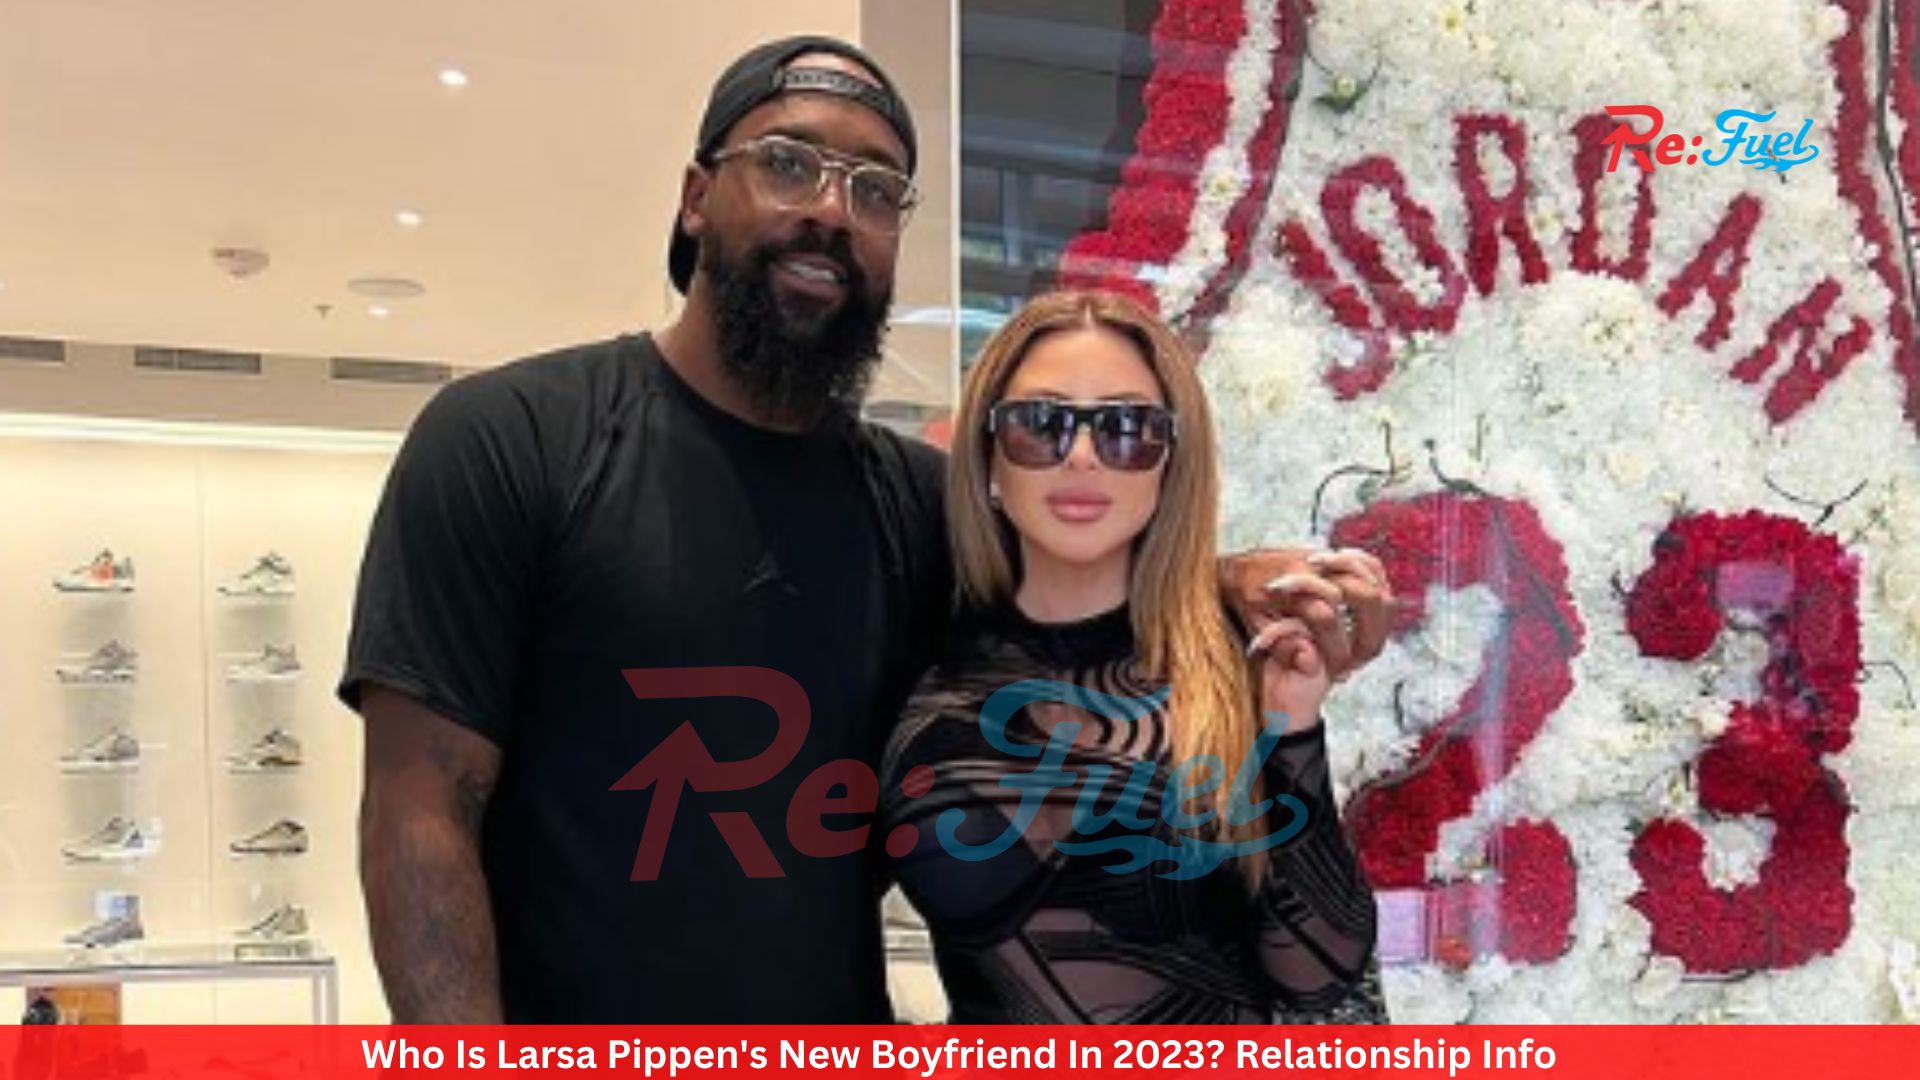 Who Is Larsa Pippen's New Boyfriend In 2023? Relationship Info